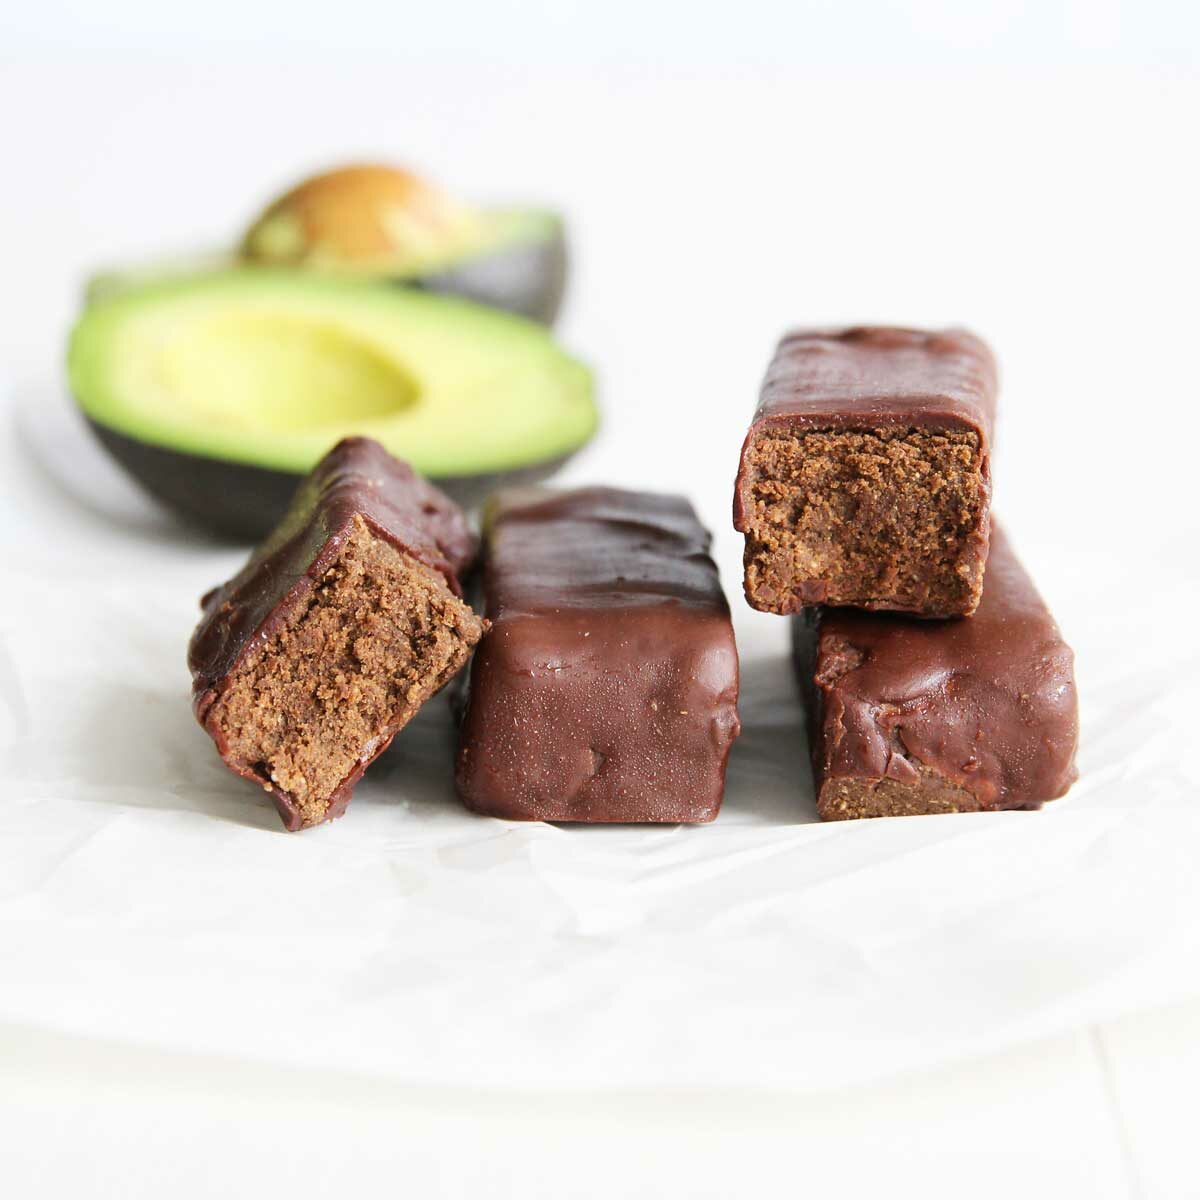 Chocolate Avocado Protein Bars (Healthy, Vegan & Low Carb!)